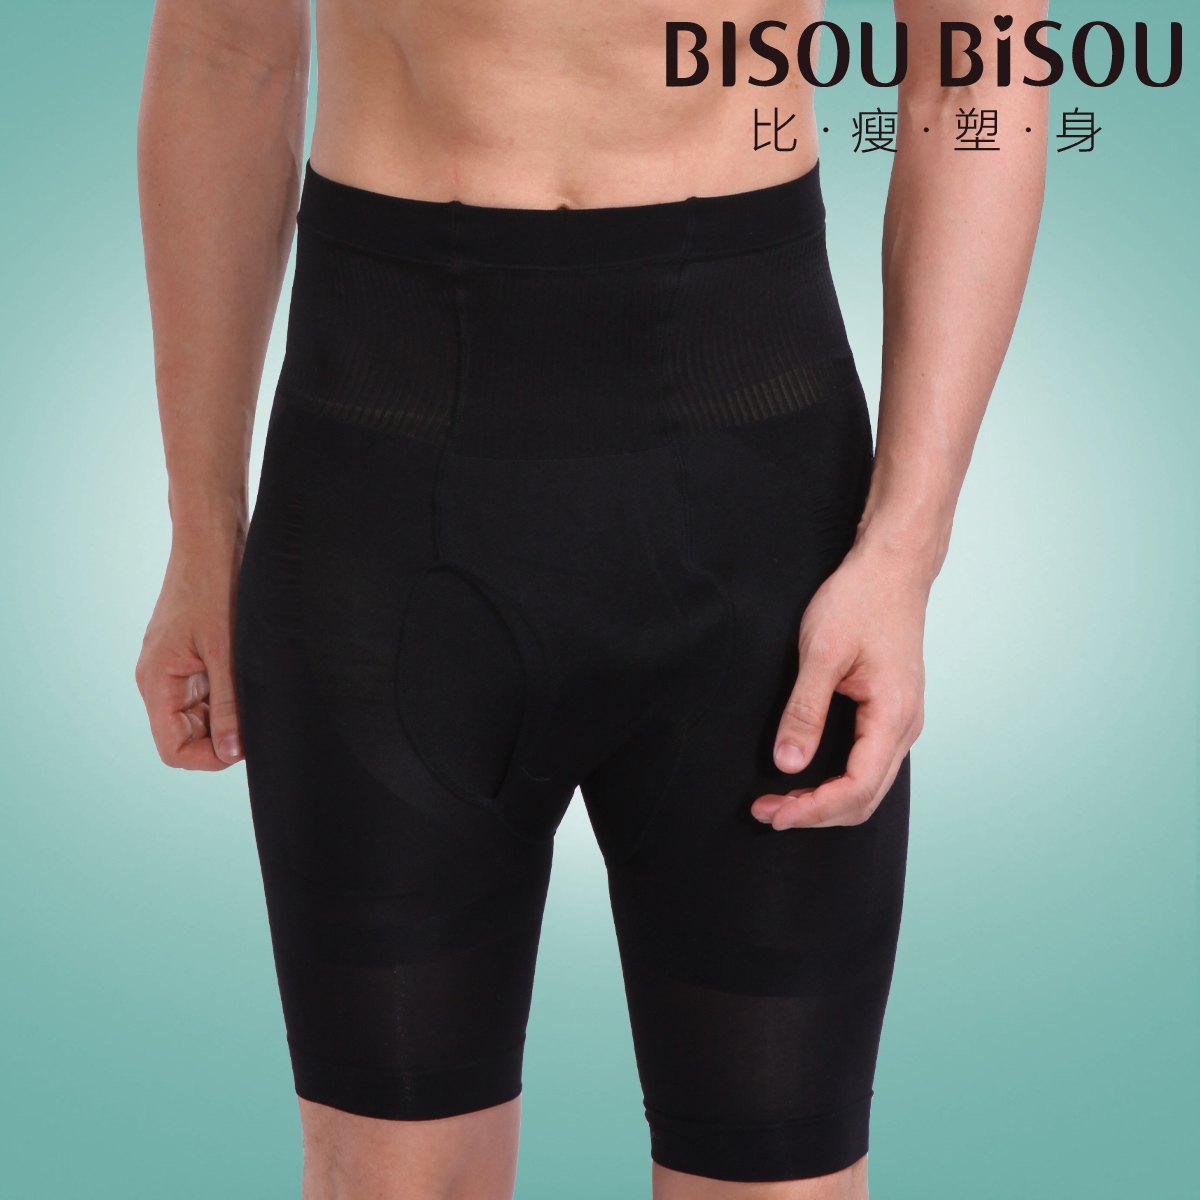 Bisou bisou male body shaping abdomen drawing butt-lifting knee-length pants high waist